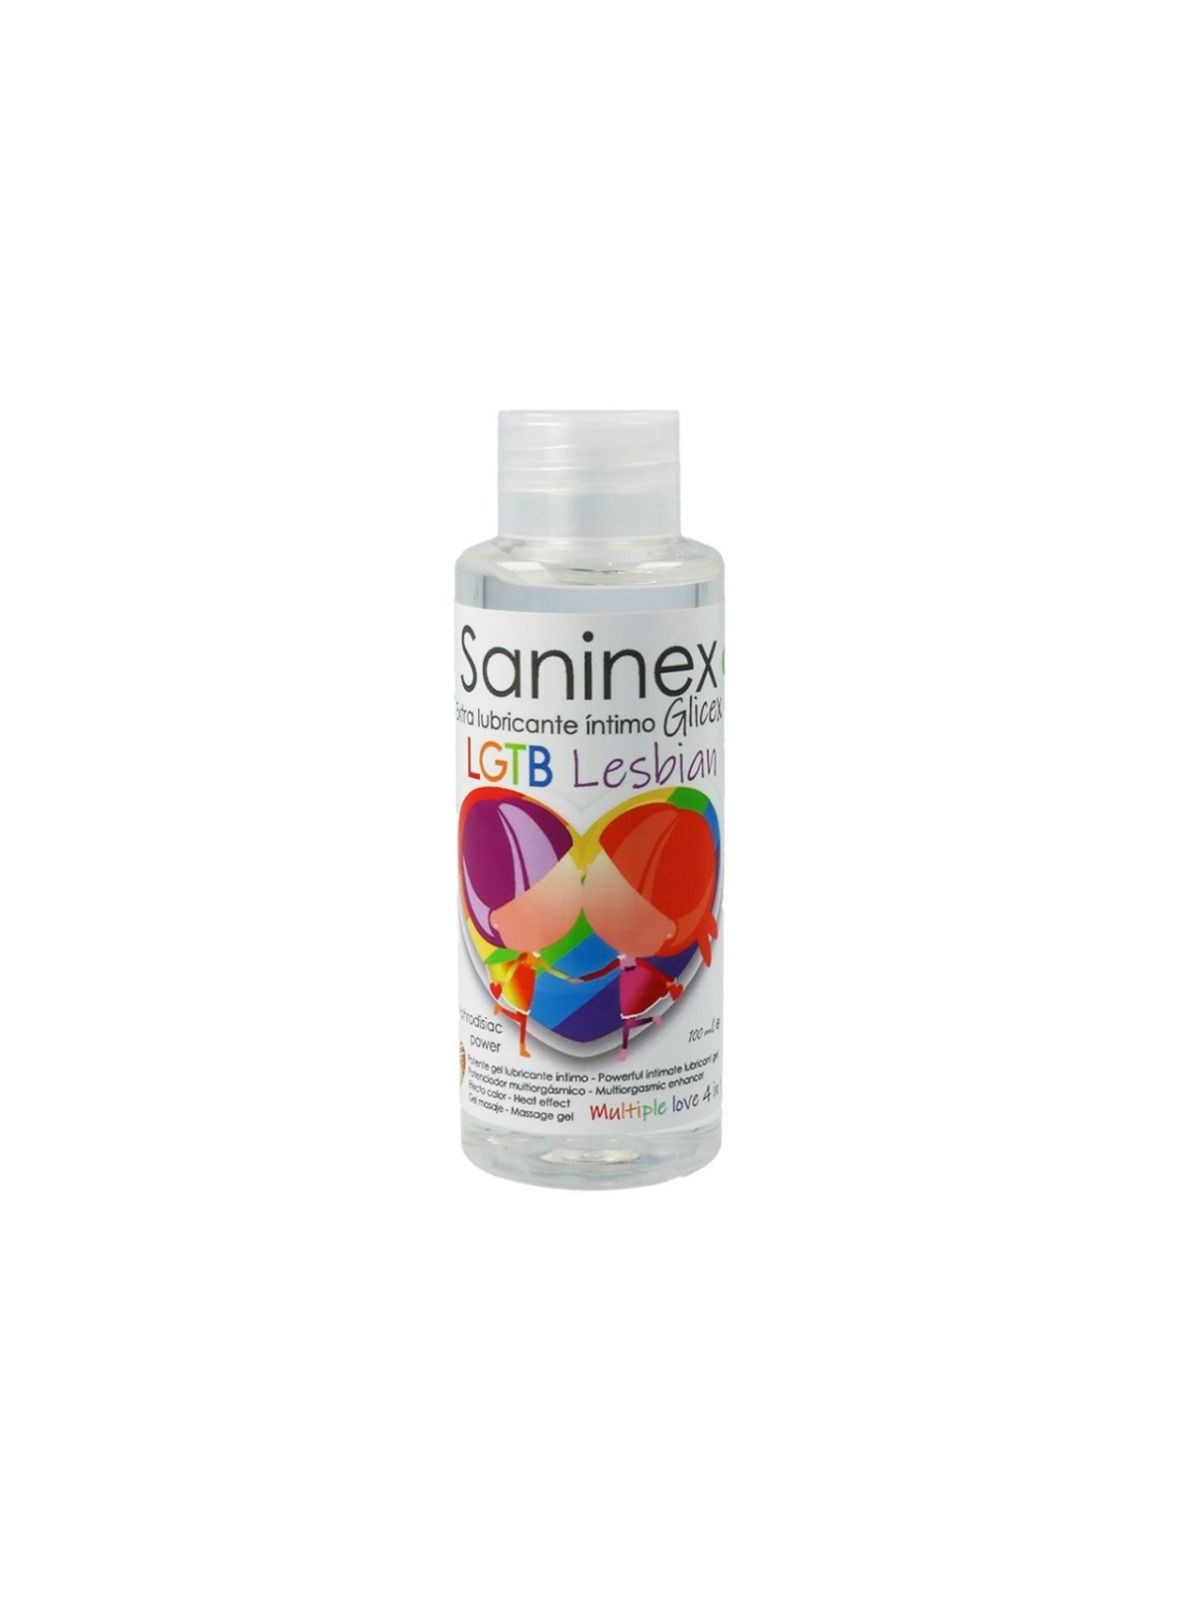 Saninex Extra Lubricante Intimo Glicex 100 ml - Comprar Gel efecto calor Saninex - Libido & orgasmo femenino (1)